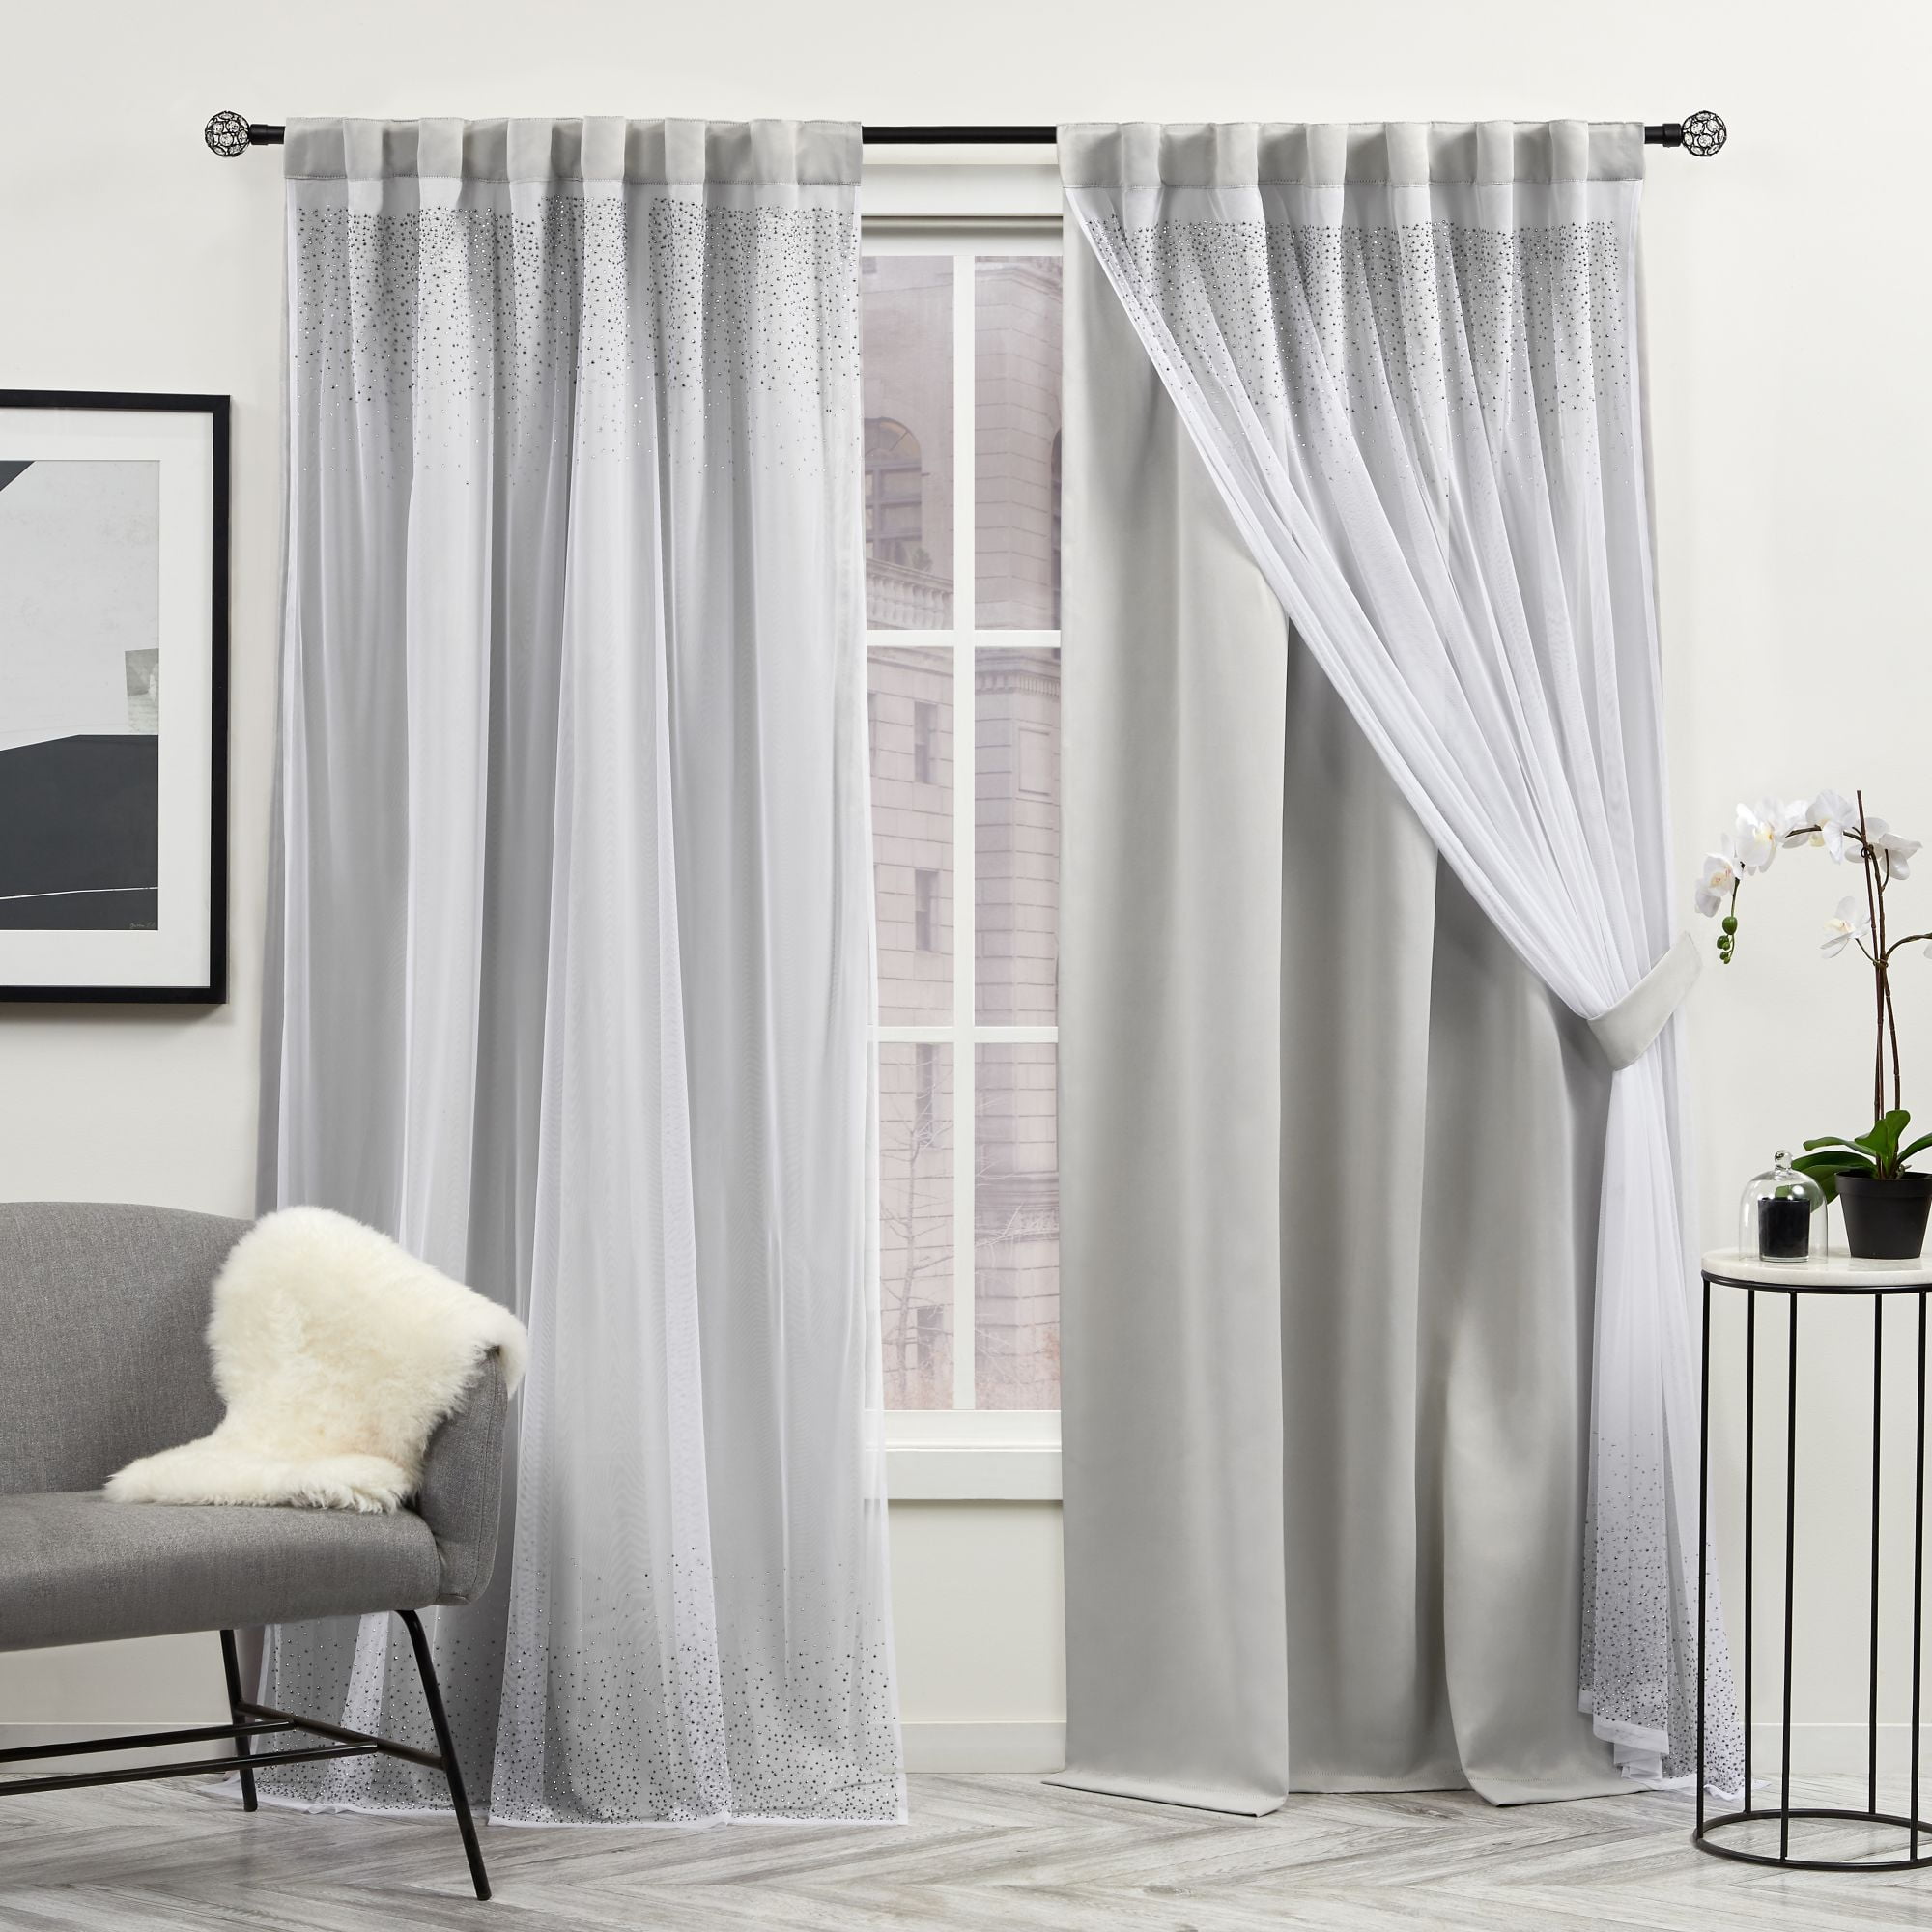 Grey 52x84 Exclusive Home Curtains Luminous Room Darkening Blackout Hidden Tab Top Curtain Panels 